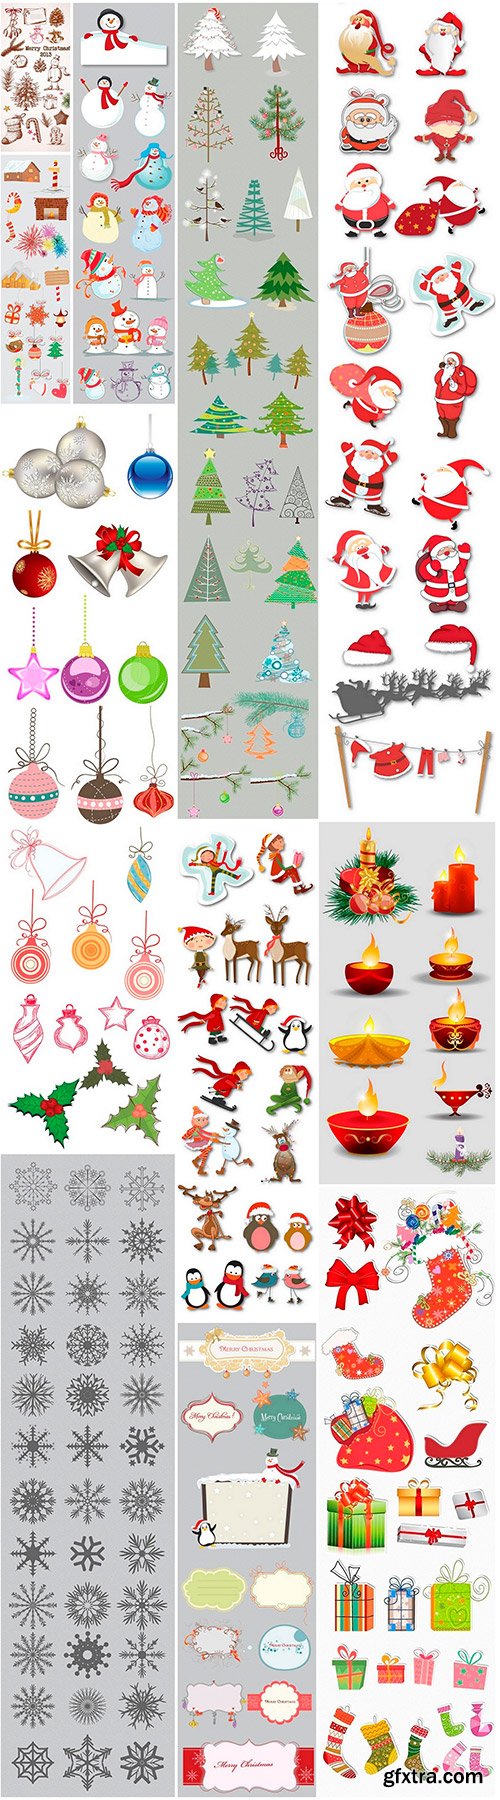 11 Professional Sets Of Christmas vectors